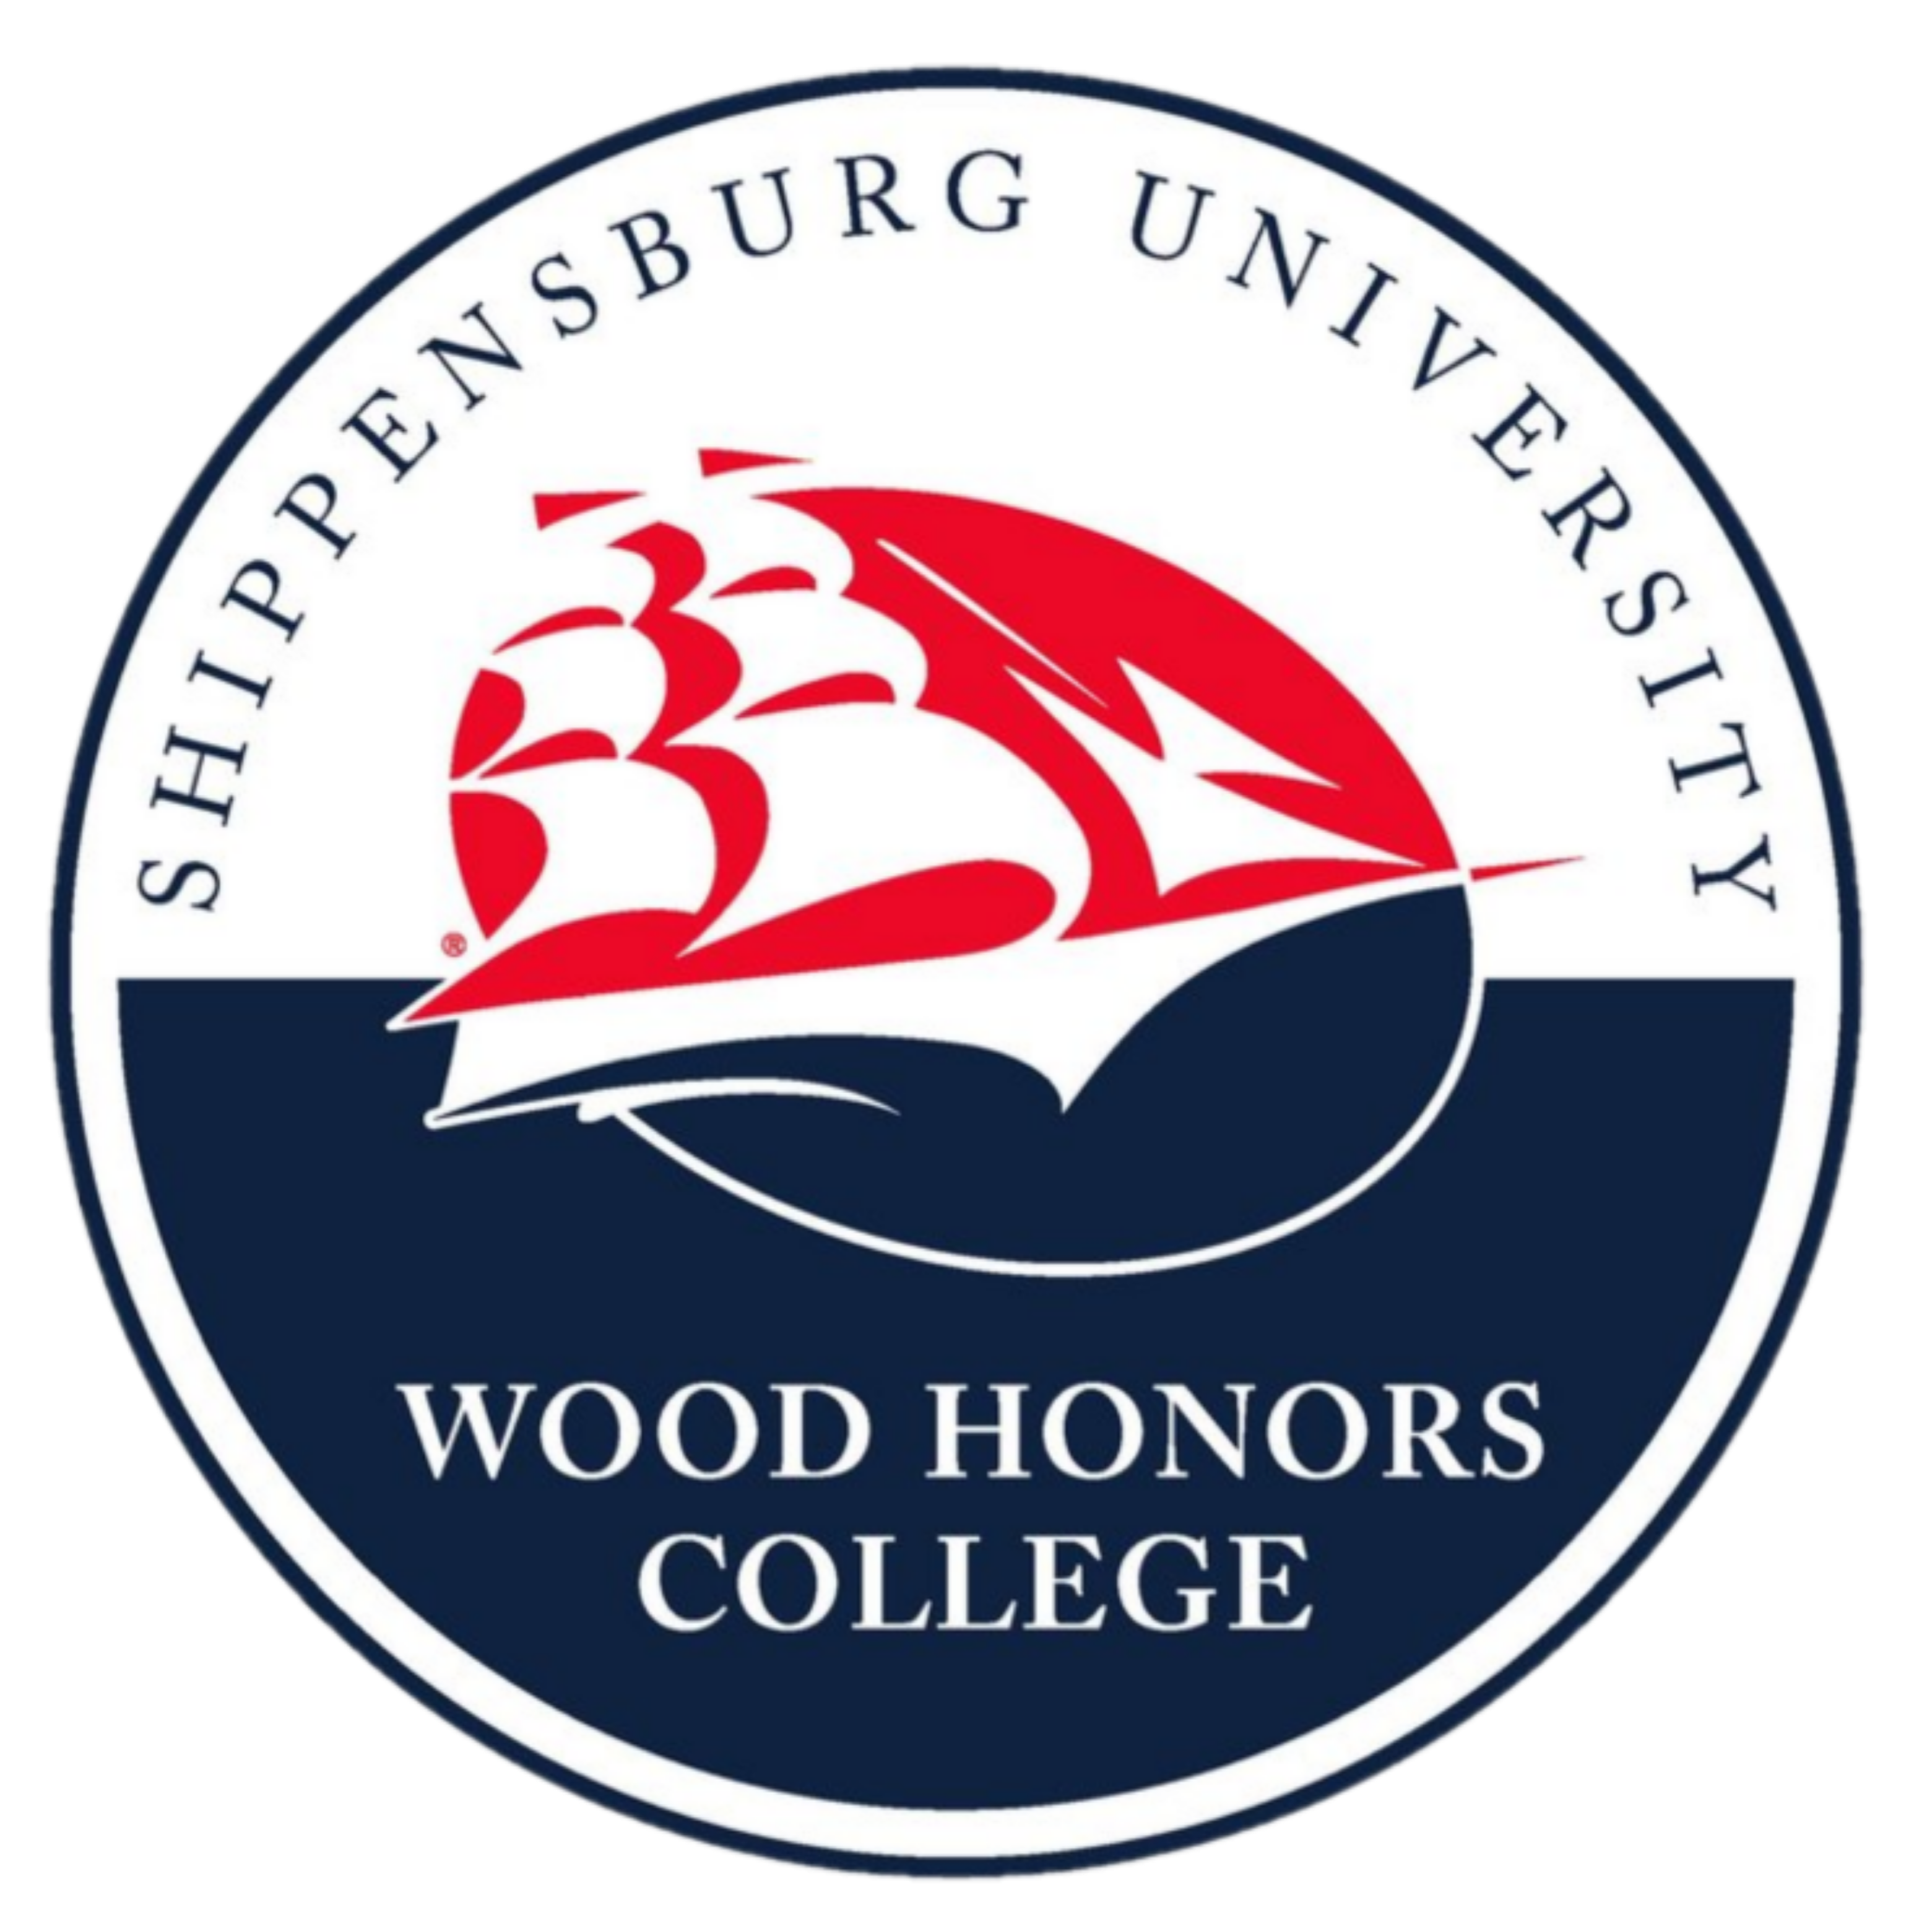 Wood Honors College logo